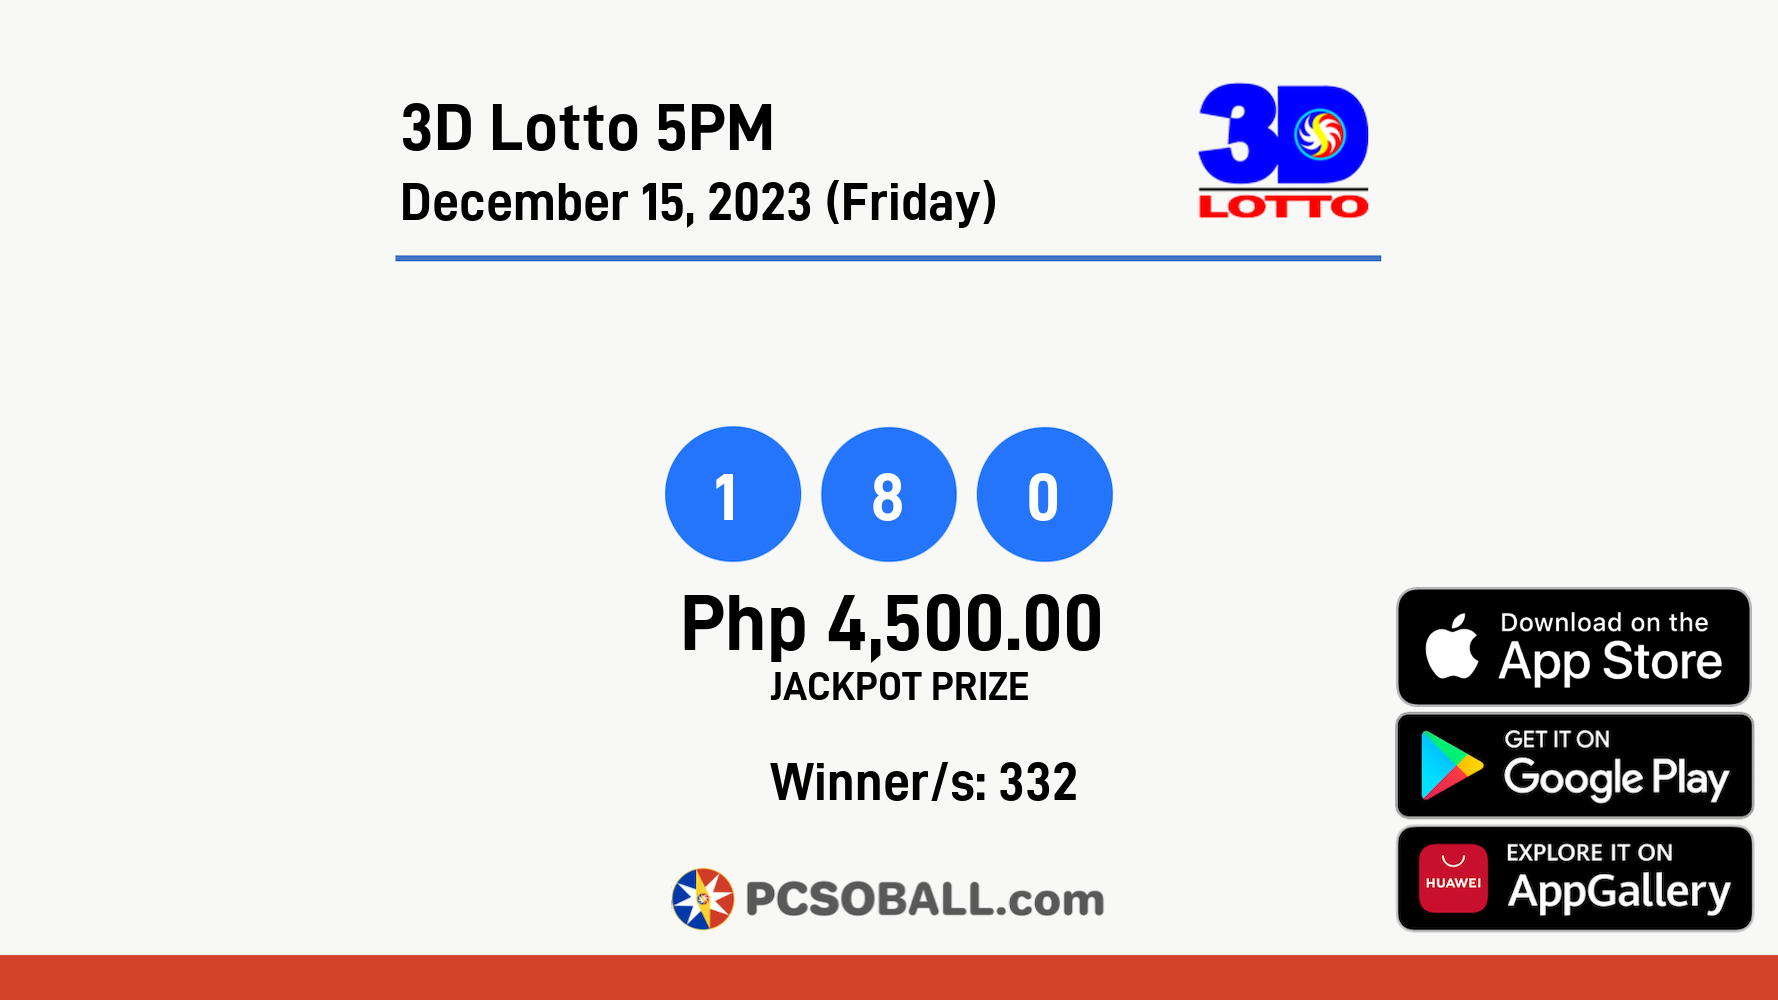 3D Lotto 5PM December 15, 2023 (Friday) Result